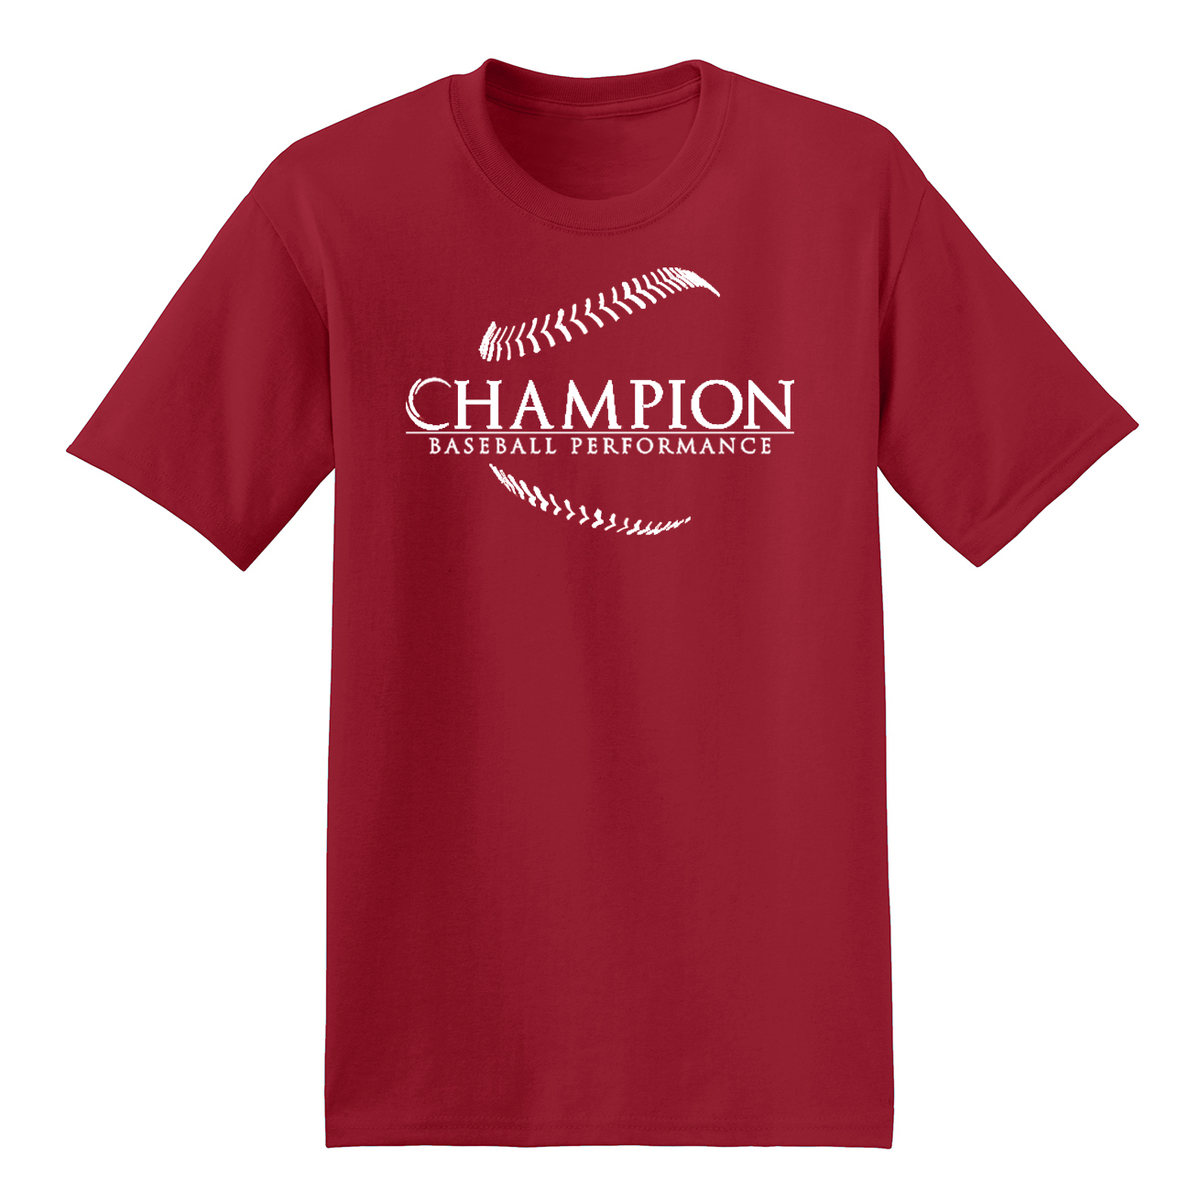 Champion Baseball Performance T-Shirt